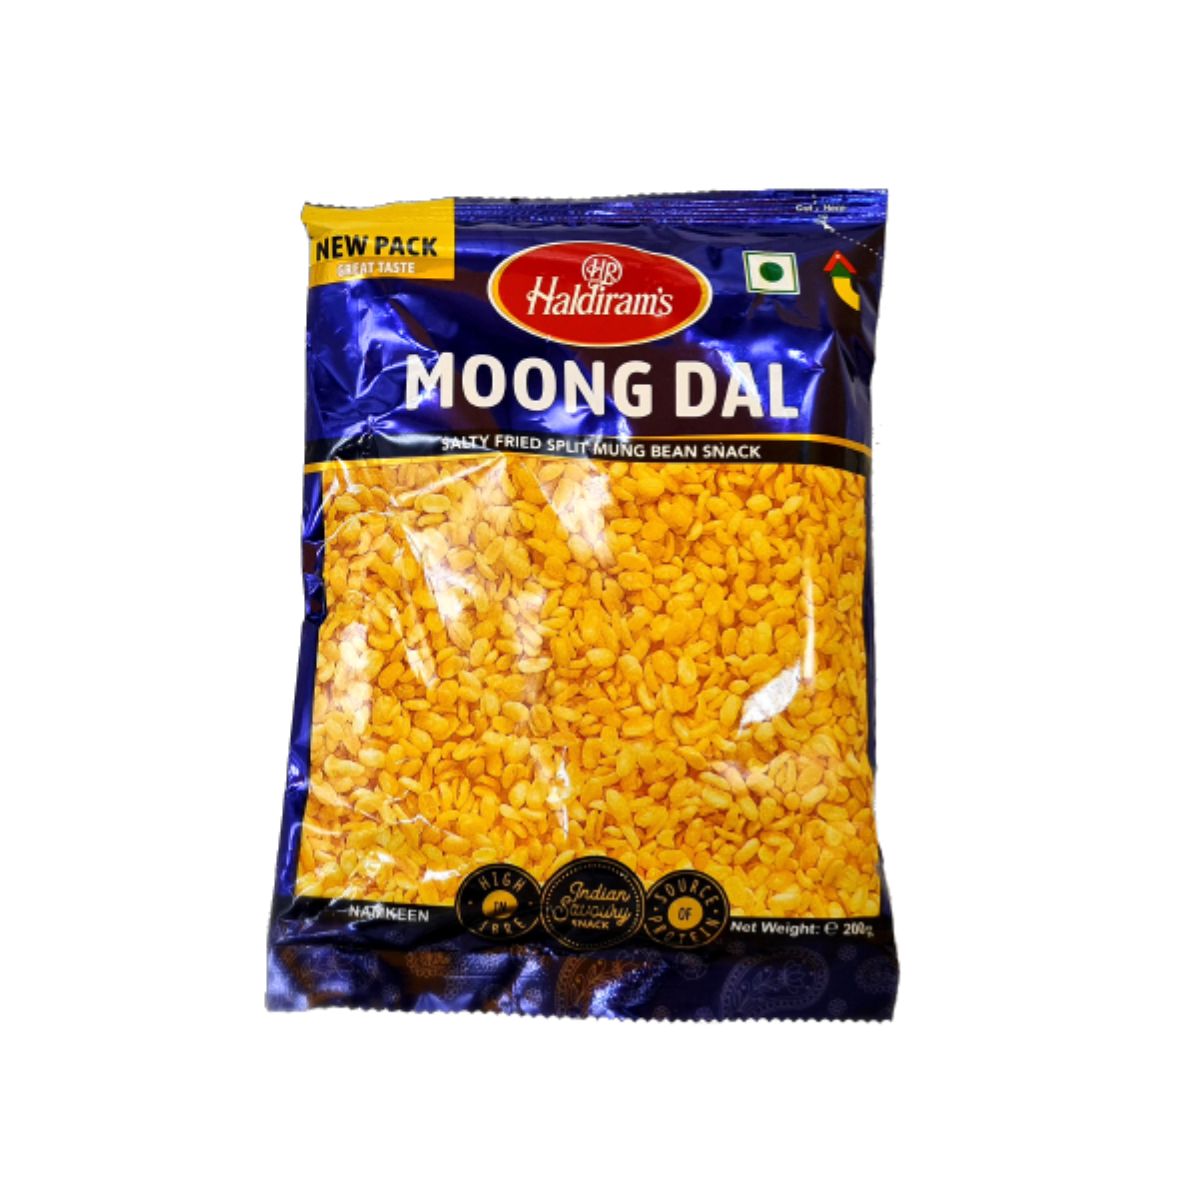 Haldiram's Moong Dal - Salty Fried Split Mung Bean Snack - 200g